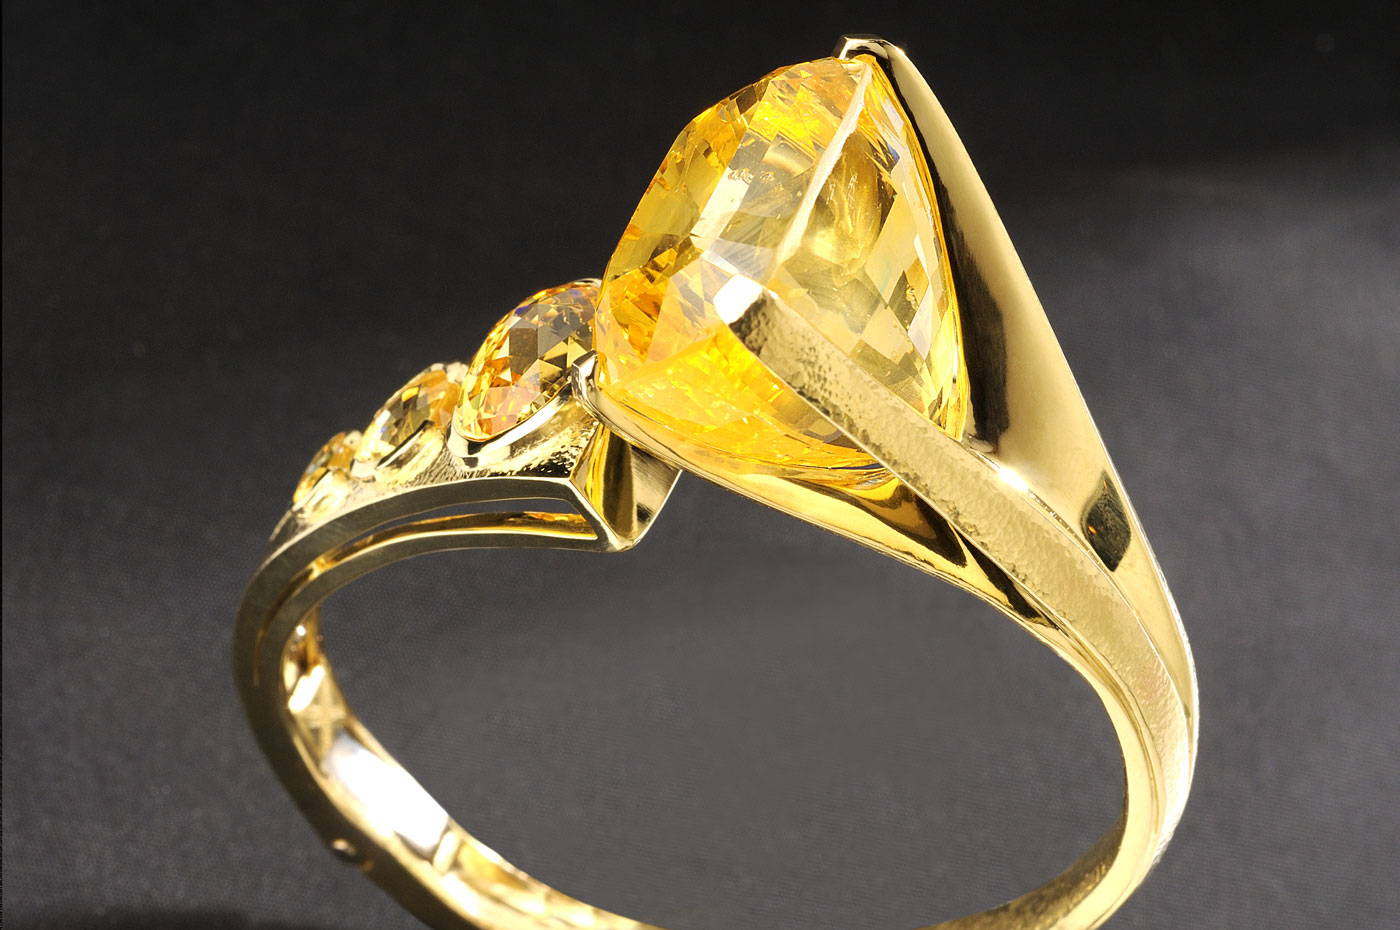 Image of Sunrise Ring at Grainger Hall of Gems Inside Exhibition Image